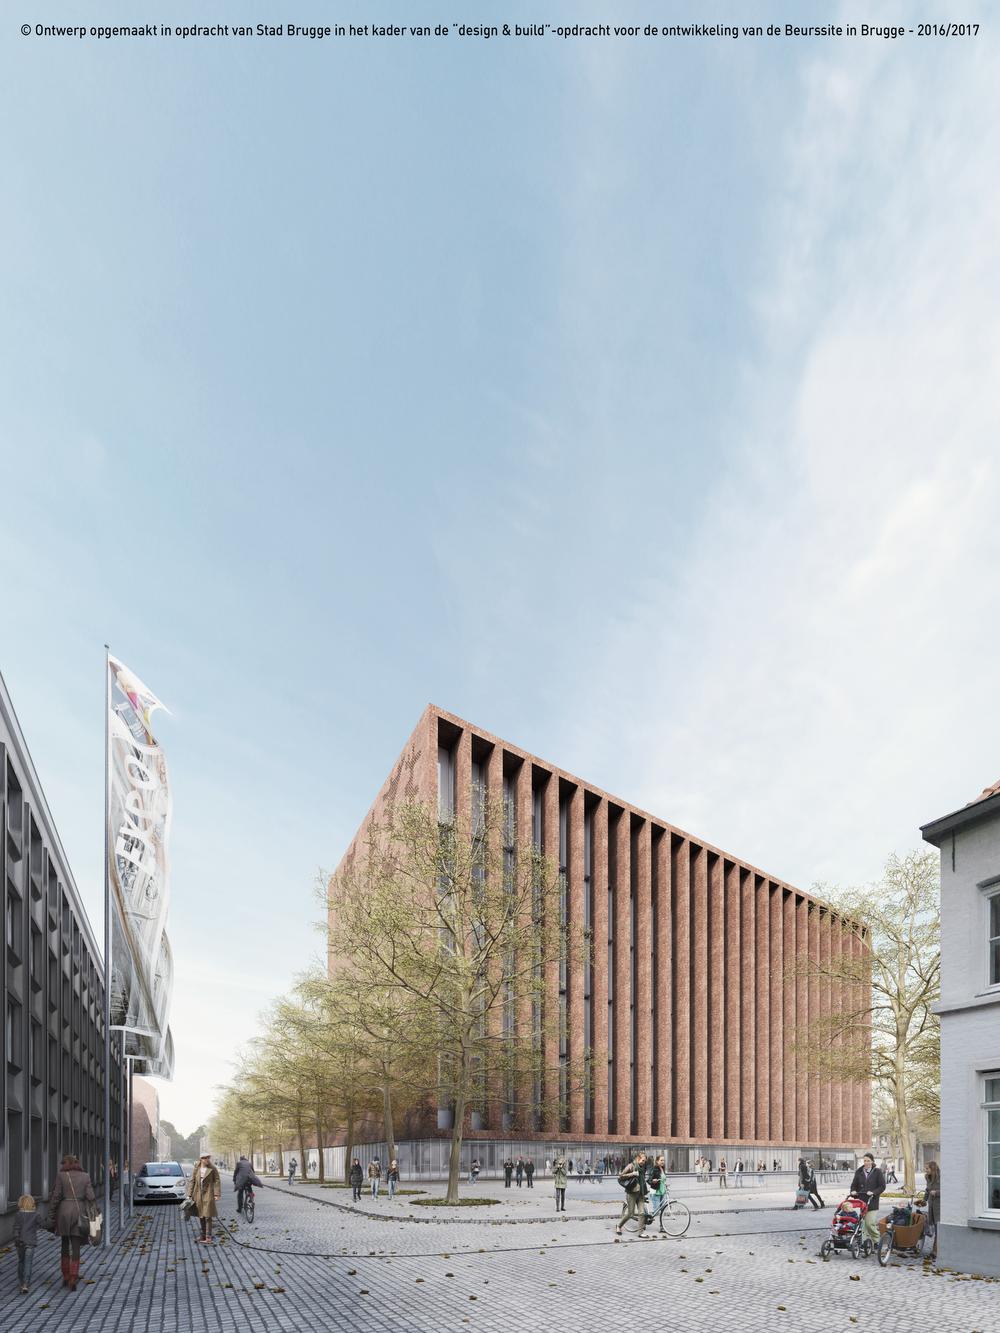 Nieuwe beurshal in Brugge wordt dit ontwerp van Portugese architect